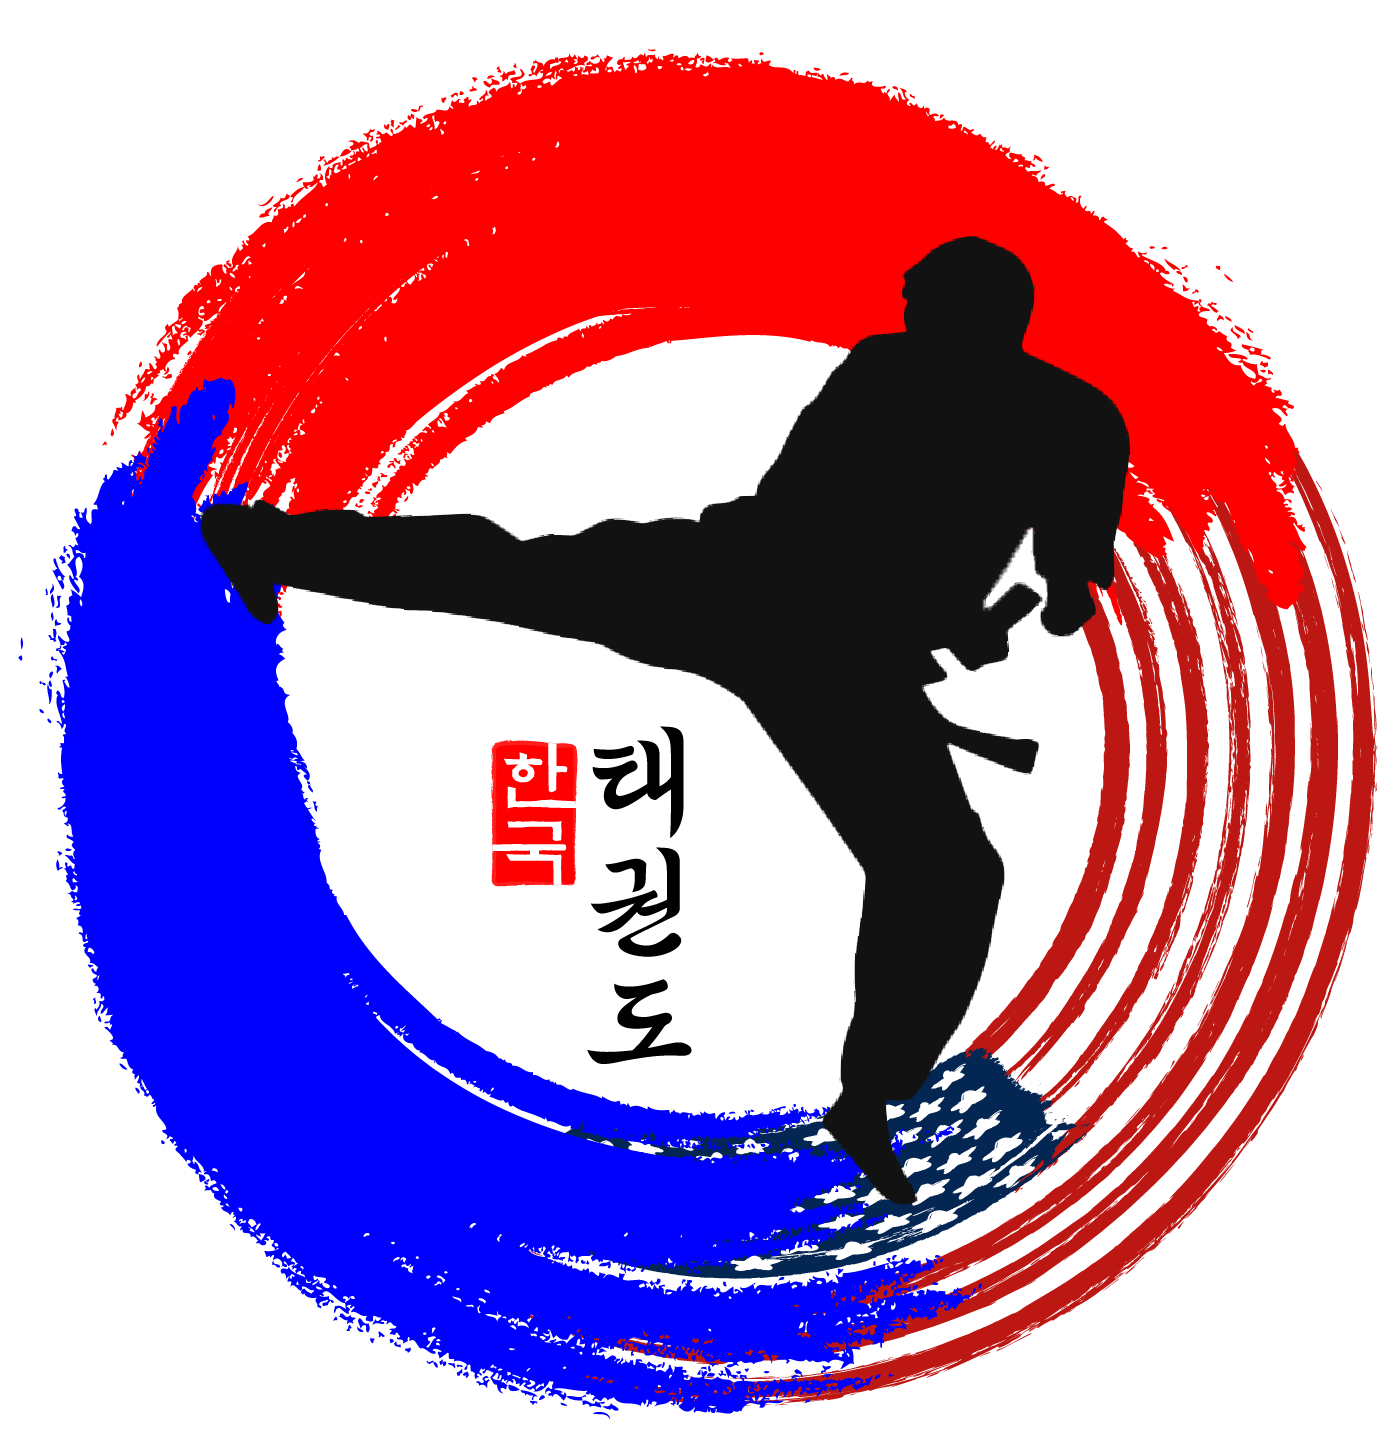 Master Lee&#39;s Hankuk Taekwondo